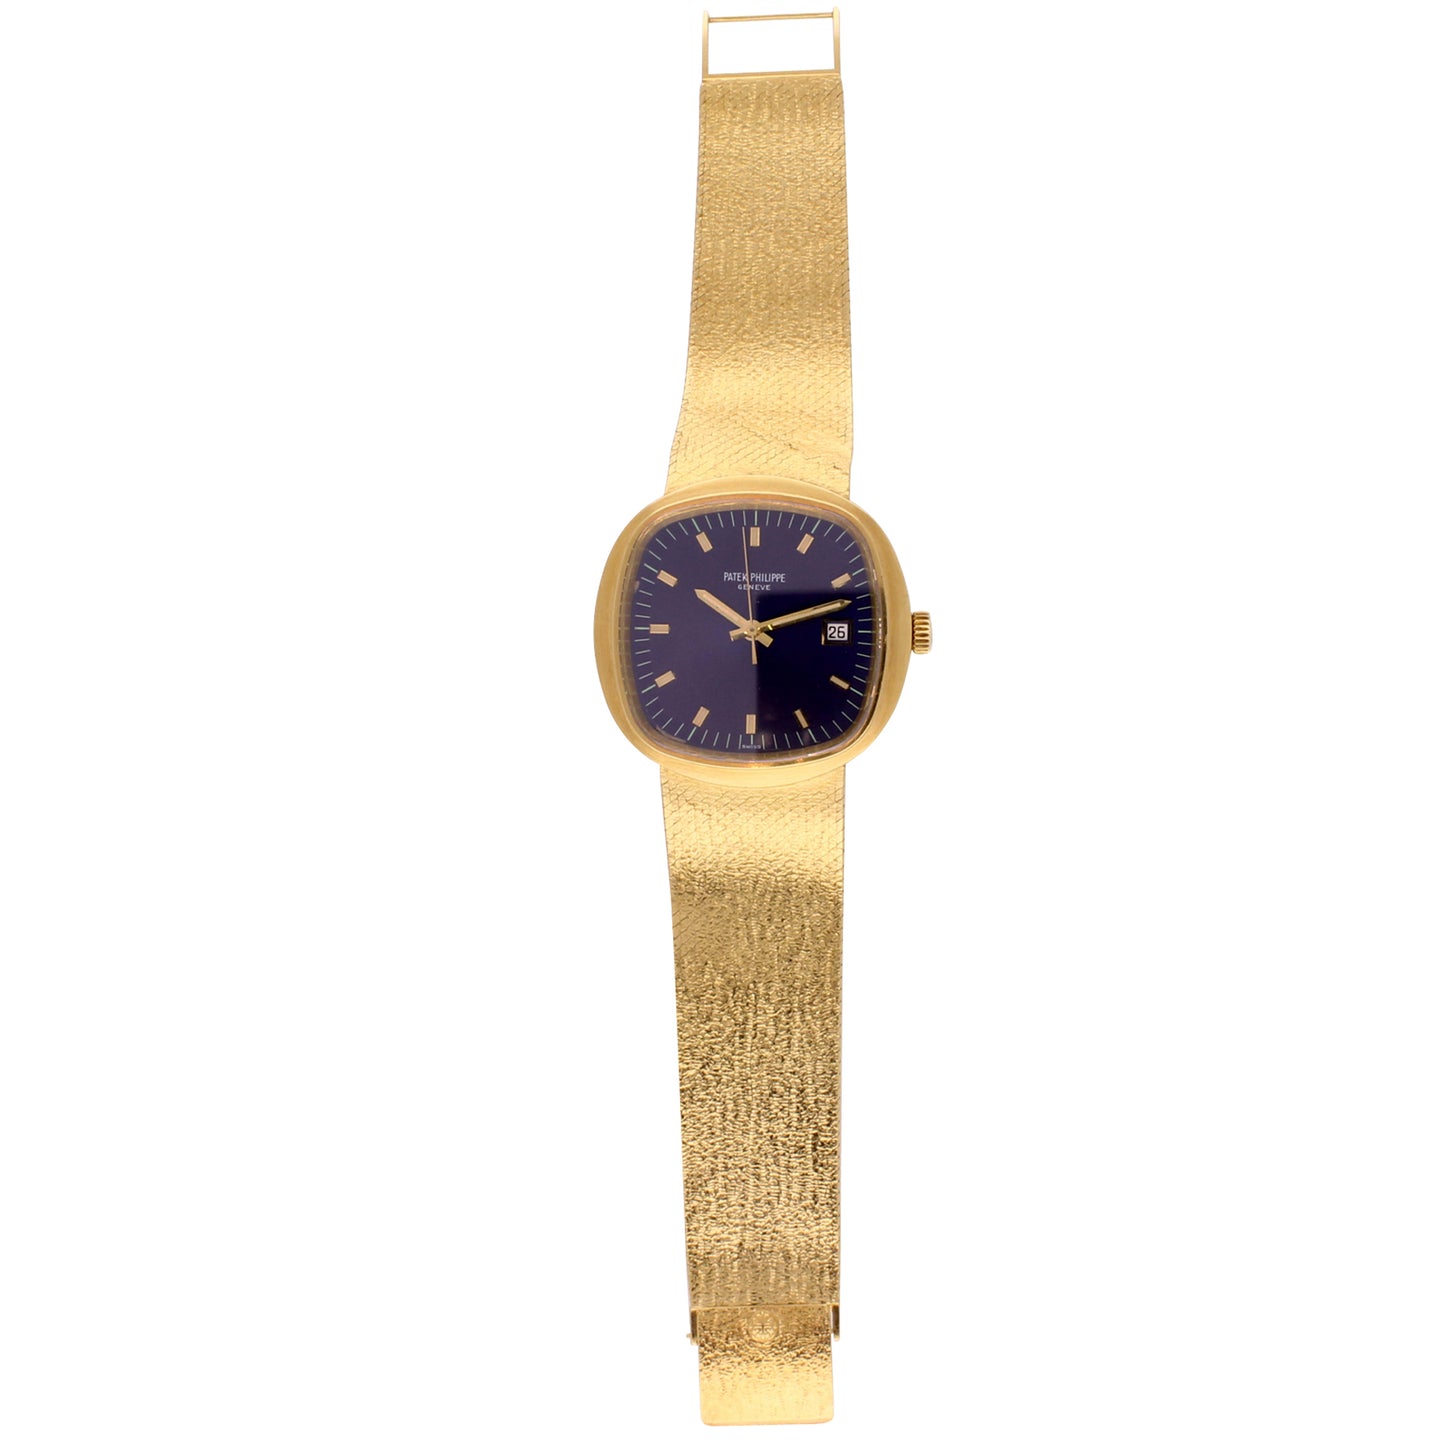 18ct yellow gold Patek Philippe, reference 3587/2 BETA 21 bracelet watch. Made 1971